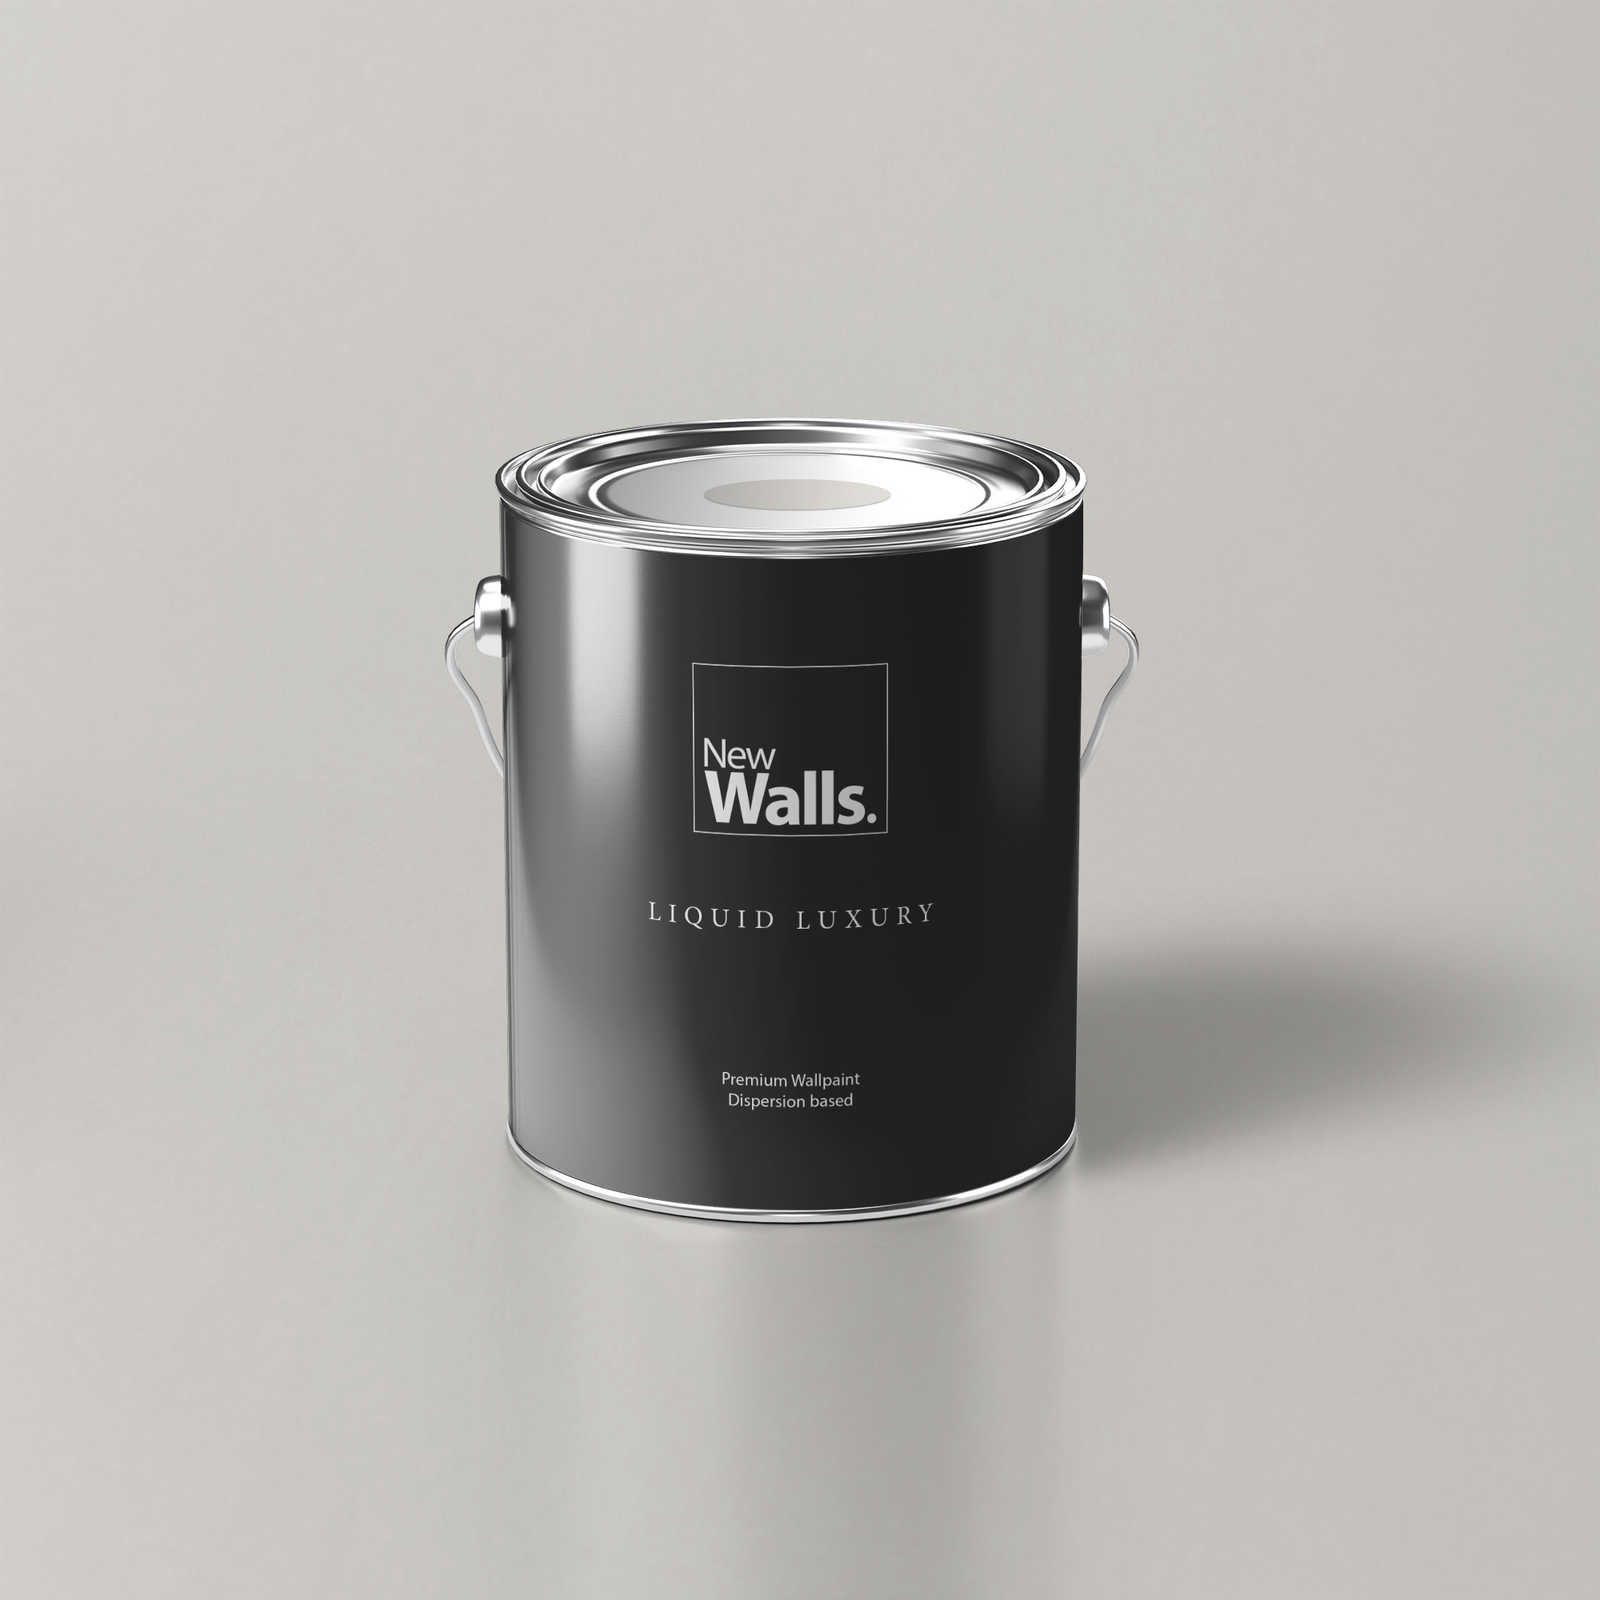 Premium Wall Paint timeless light grey »Creamy Grey« NW108 – 5 litre
